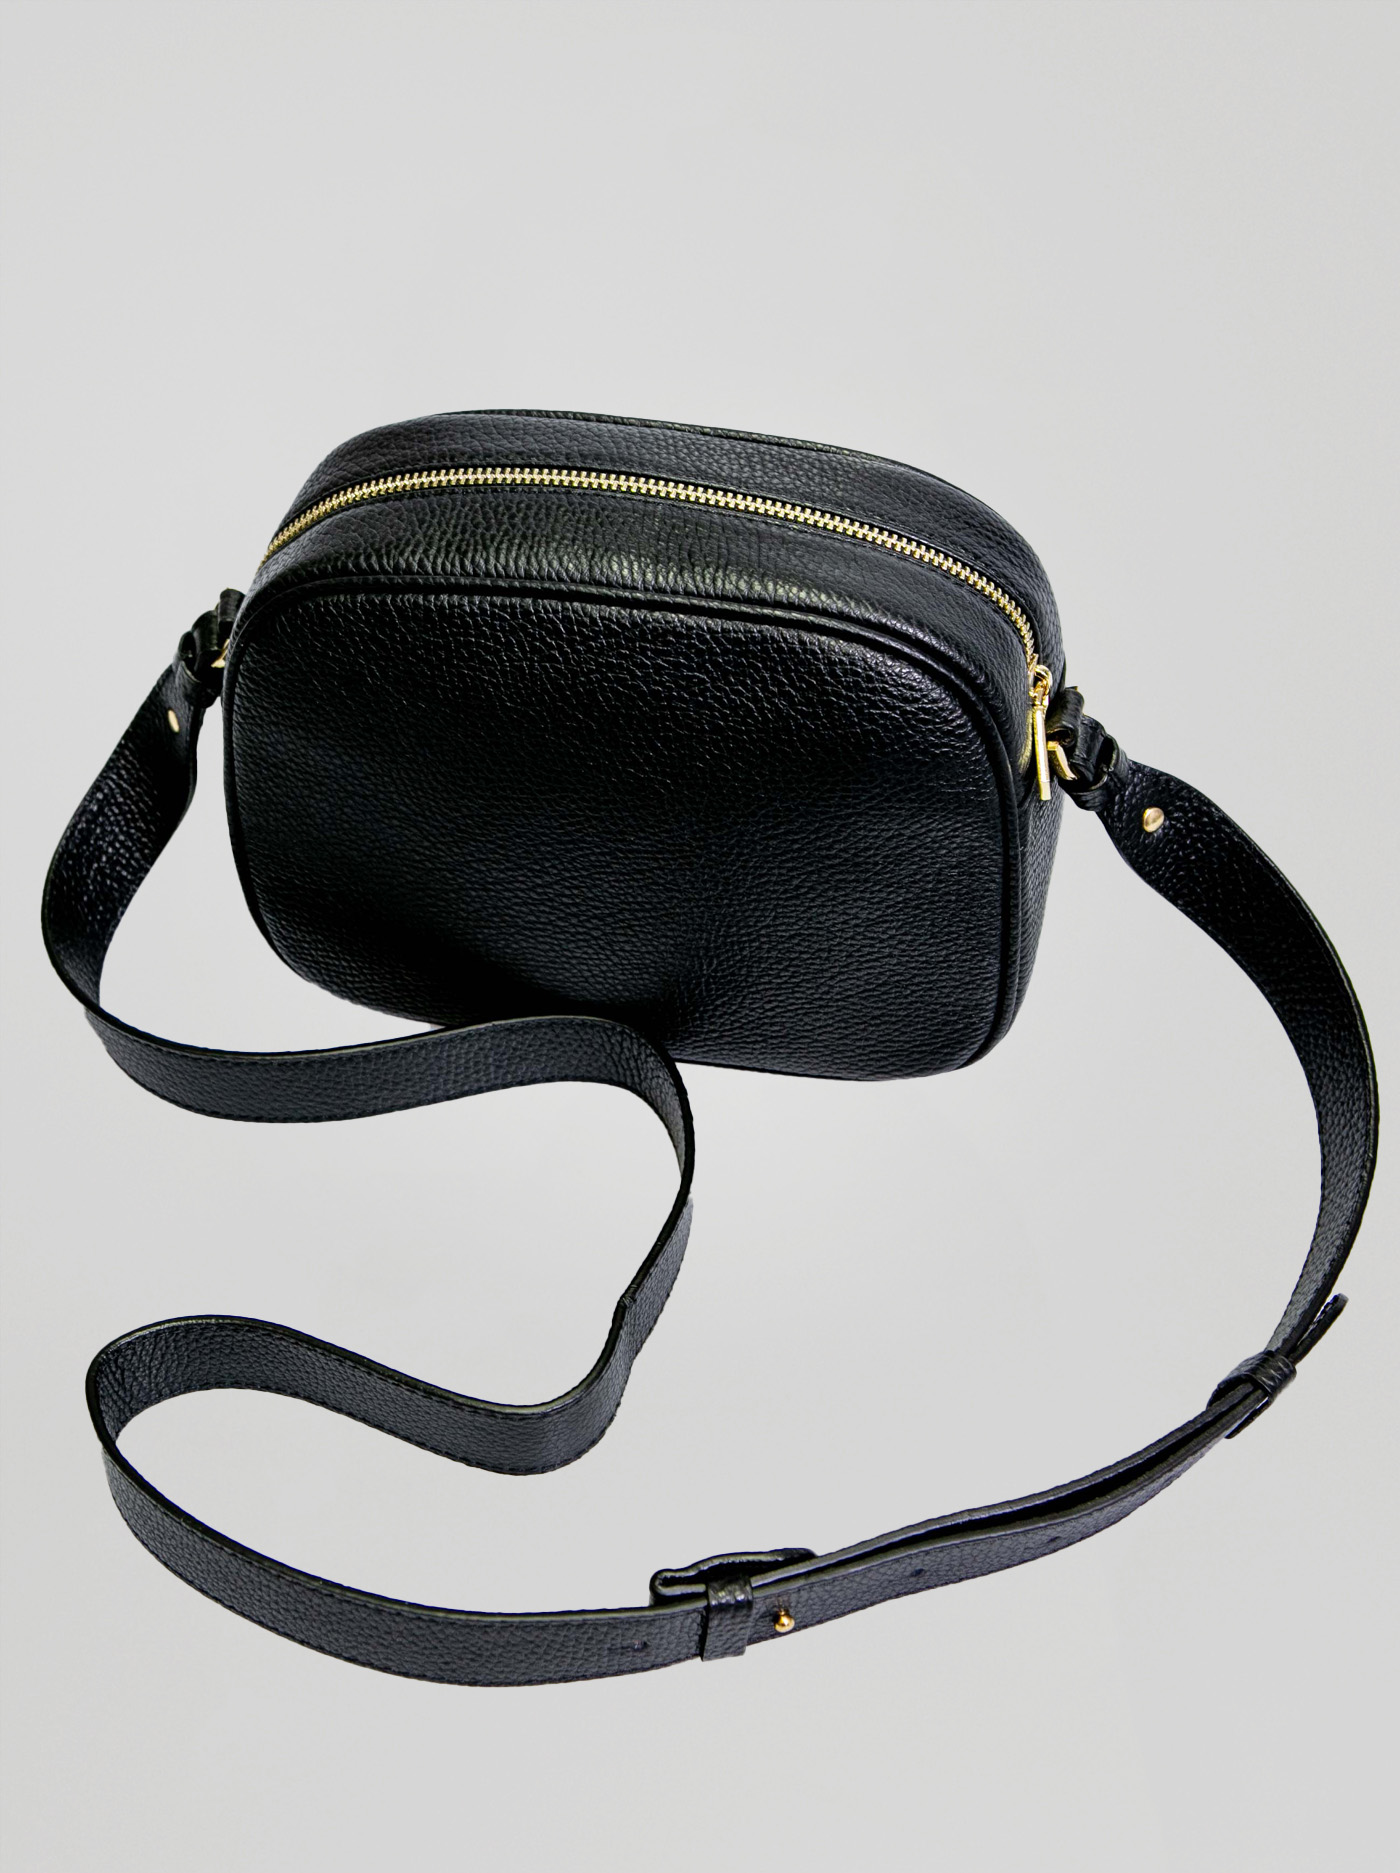 Leather bag - Wojewodzic image 4